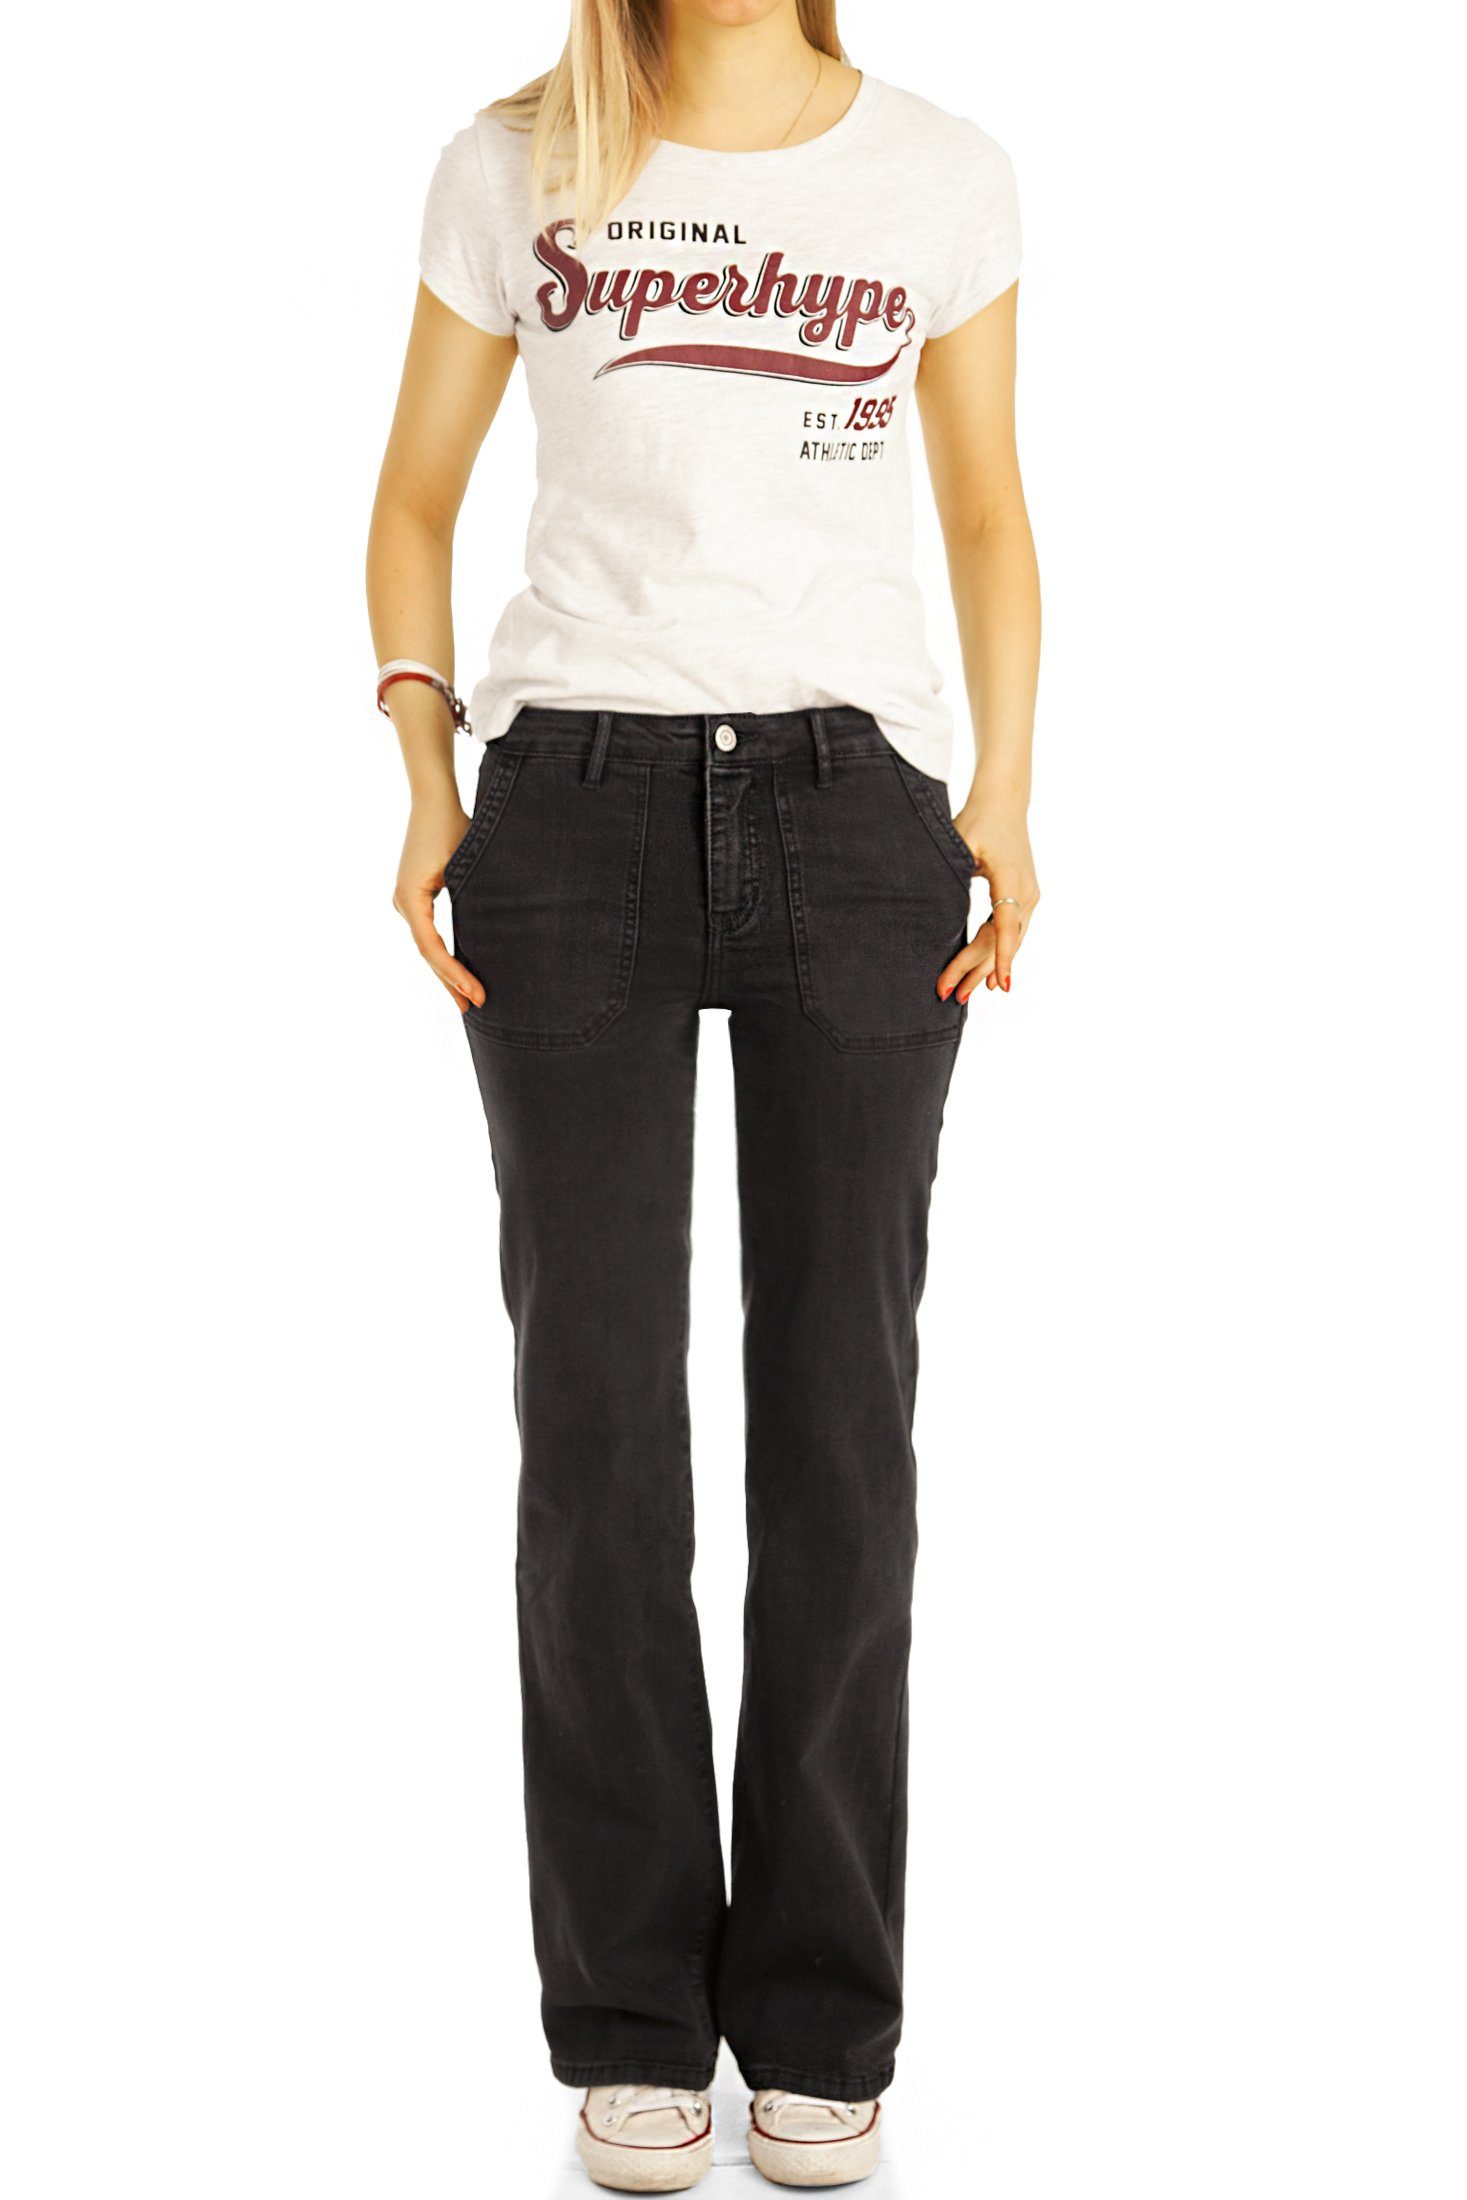 be styled Bootcut-Jeans Bootcut Jeans, waist dunkelblau j31k 5-Pocket-Style straight medium - Damen Passform Stretch-Anteil, - Hosen mit